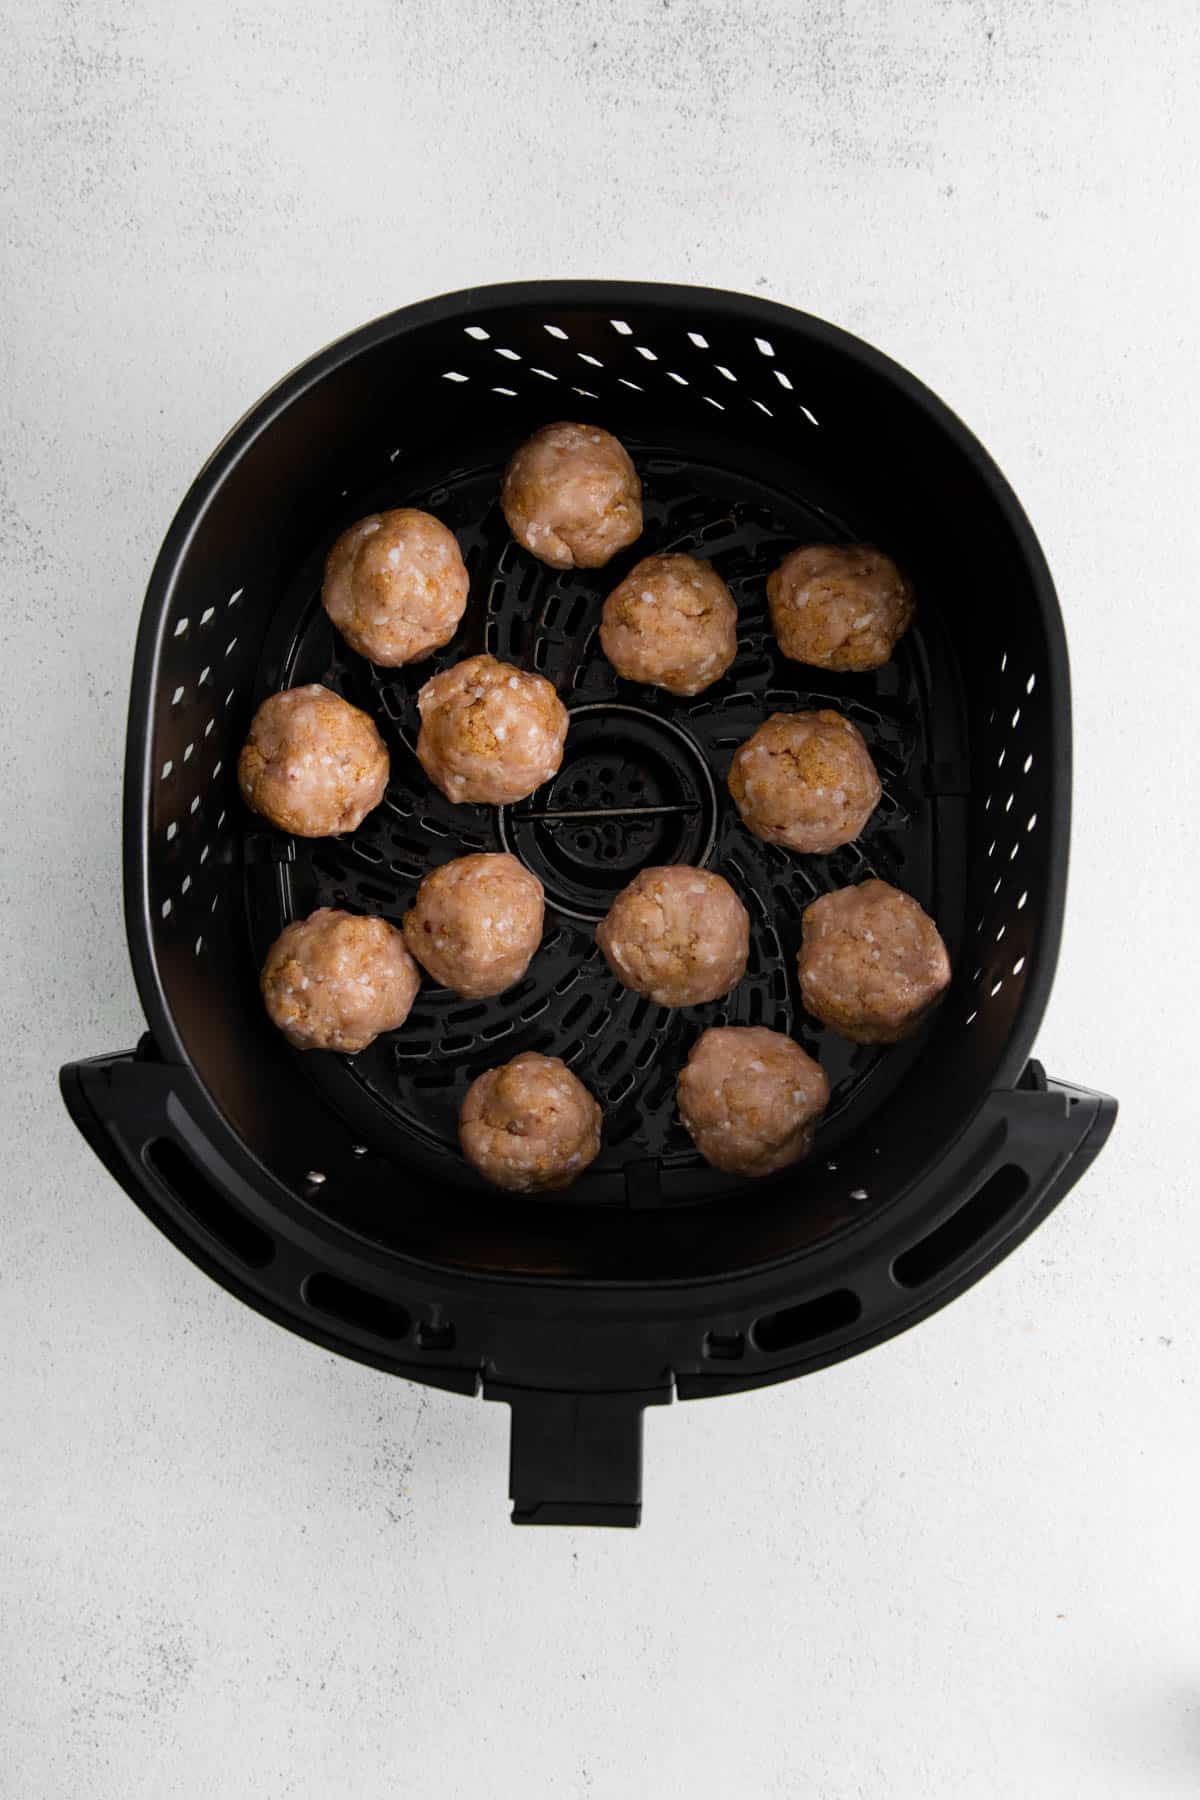 Uncooked chicken meatballs in an air fryer basket.